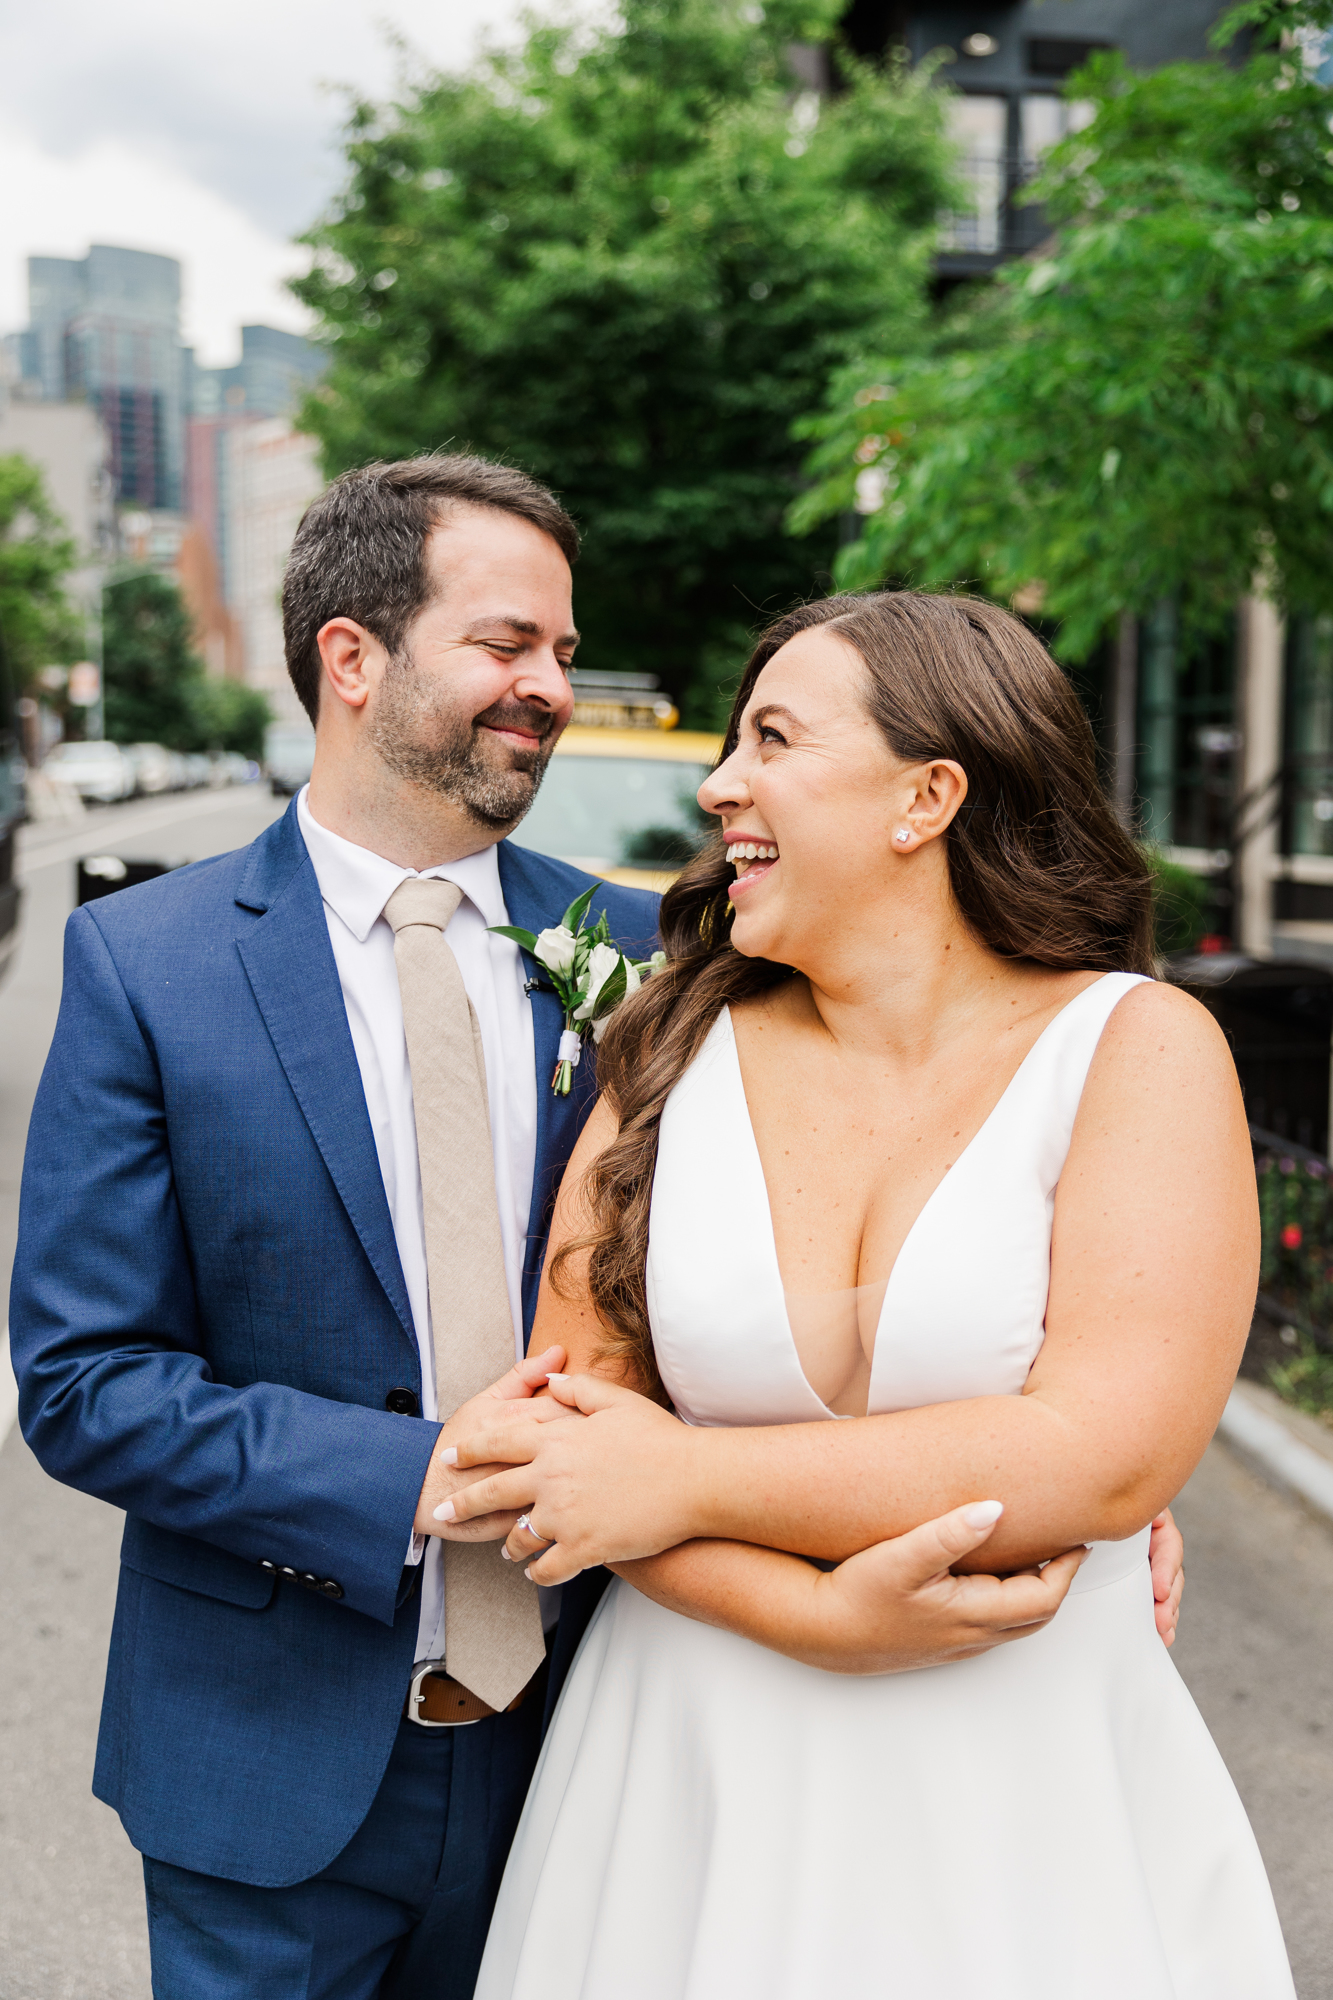 Amazing Greenpoint Loft Wedding in New York City